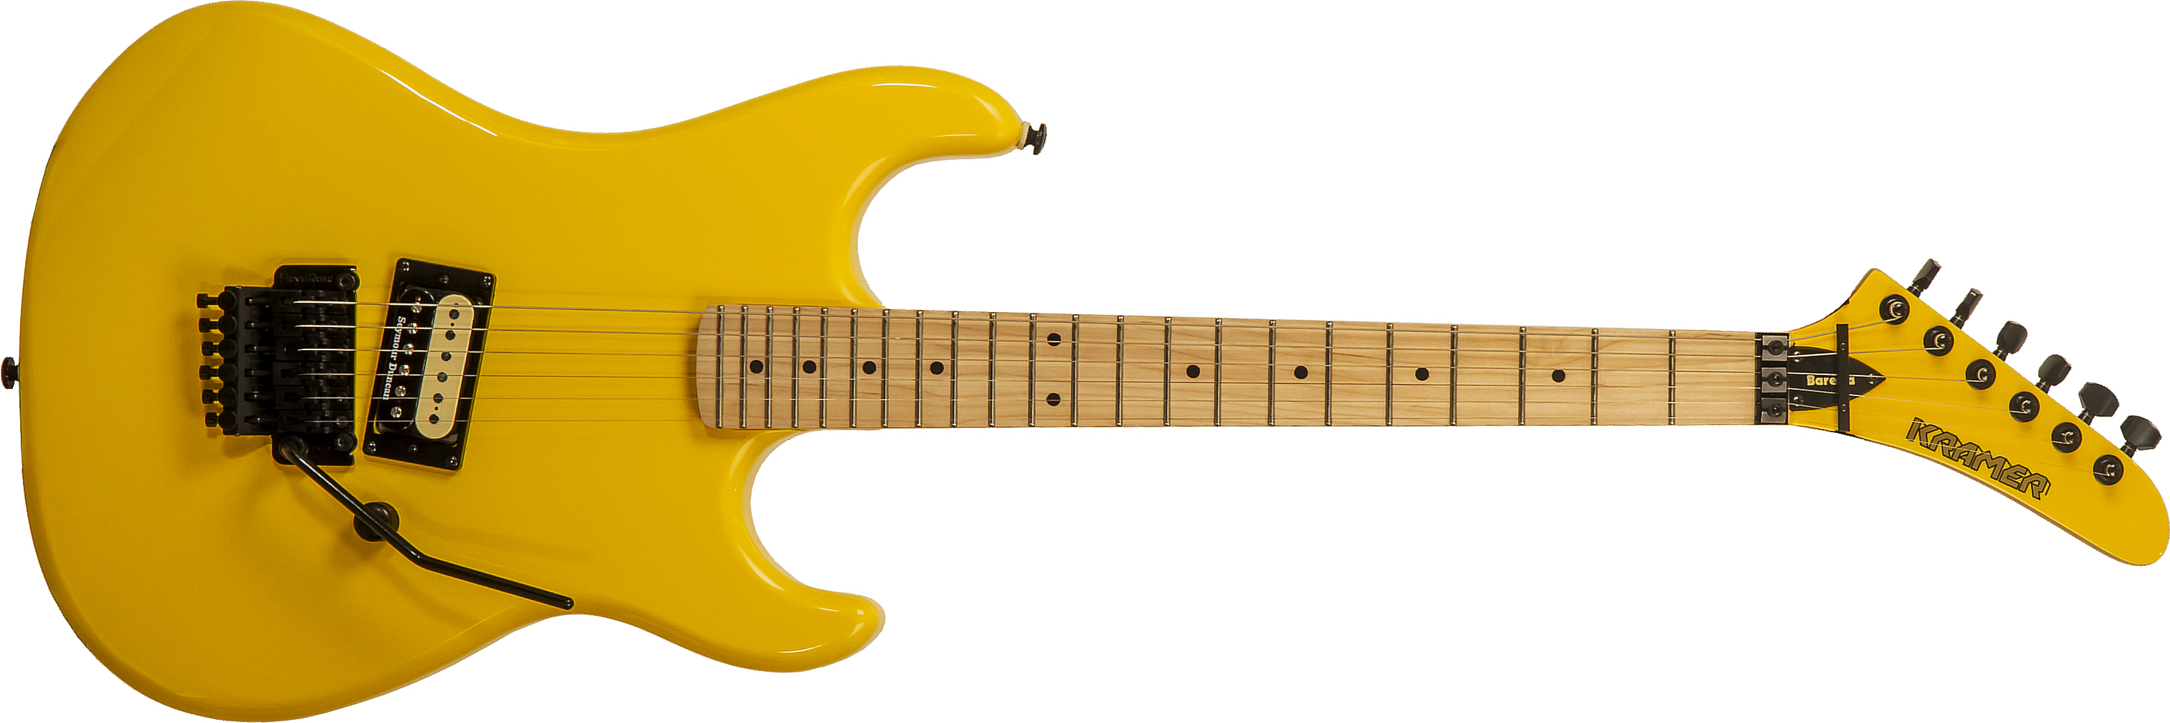 Kramer Baretta H Seymour Duncan Fr Mn - Bumblebee Yellow - Str shape electric guitar - Main picture